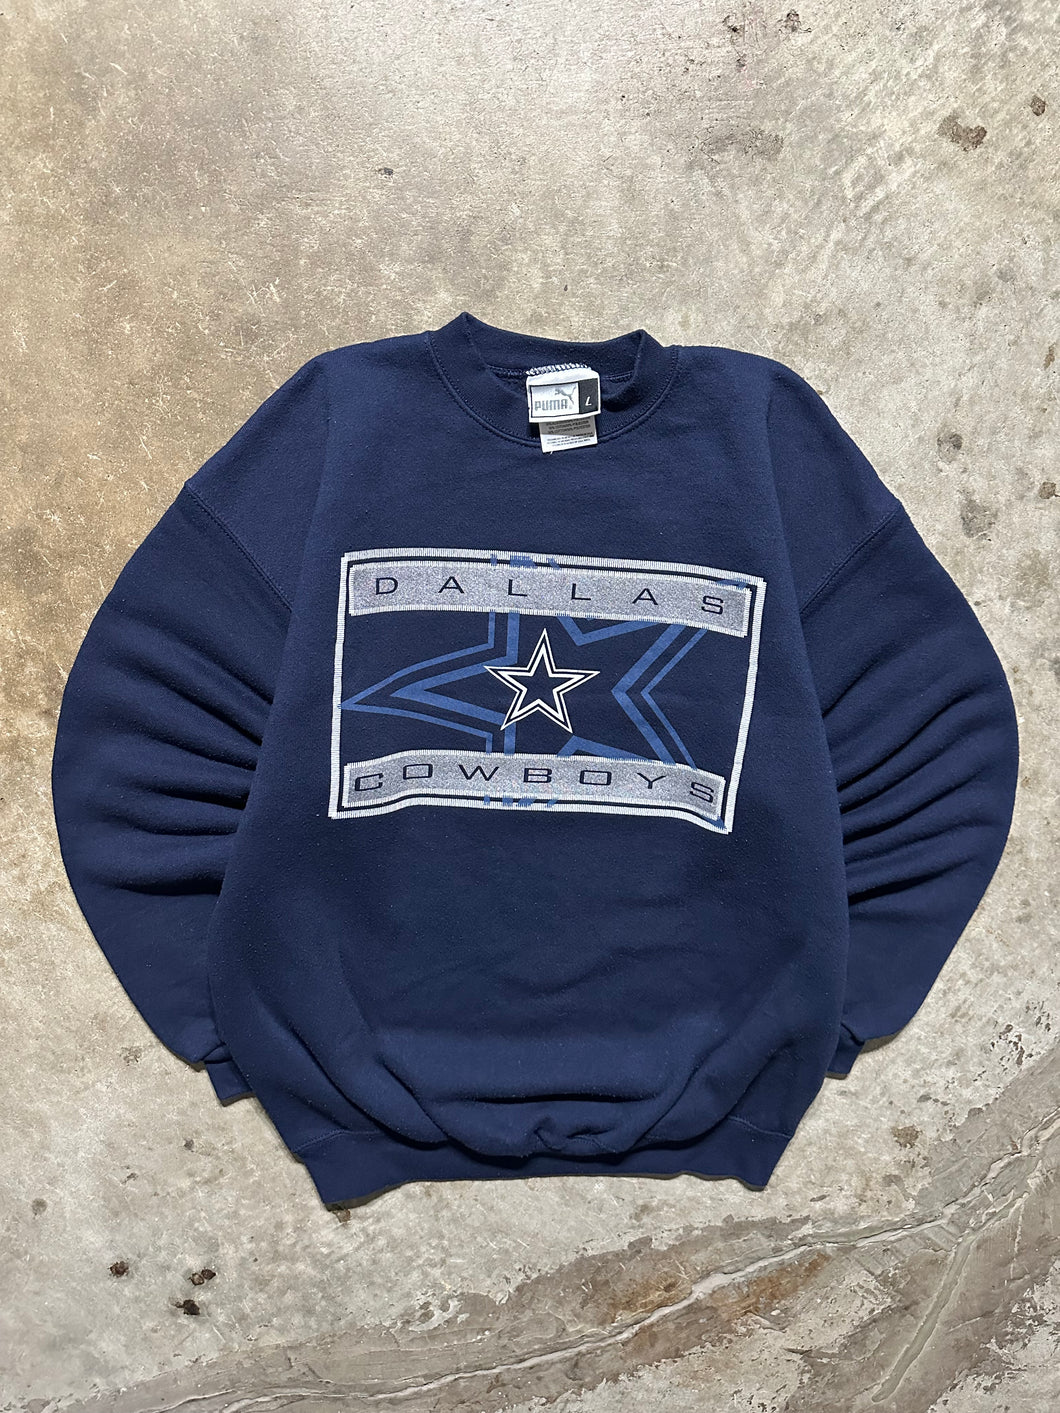 Vintage Dallas Cowboys 90s Puma NFL Football Sweatshirt (Large)